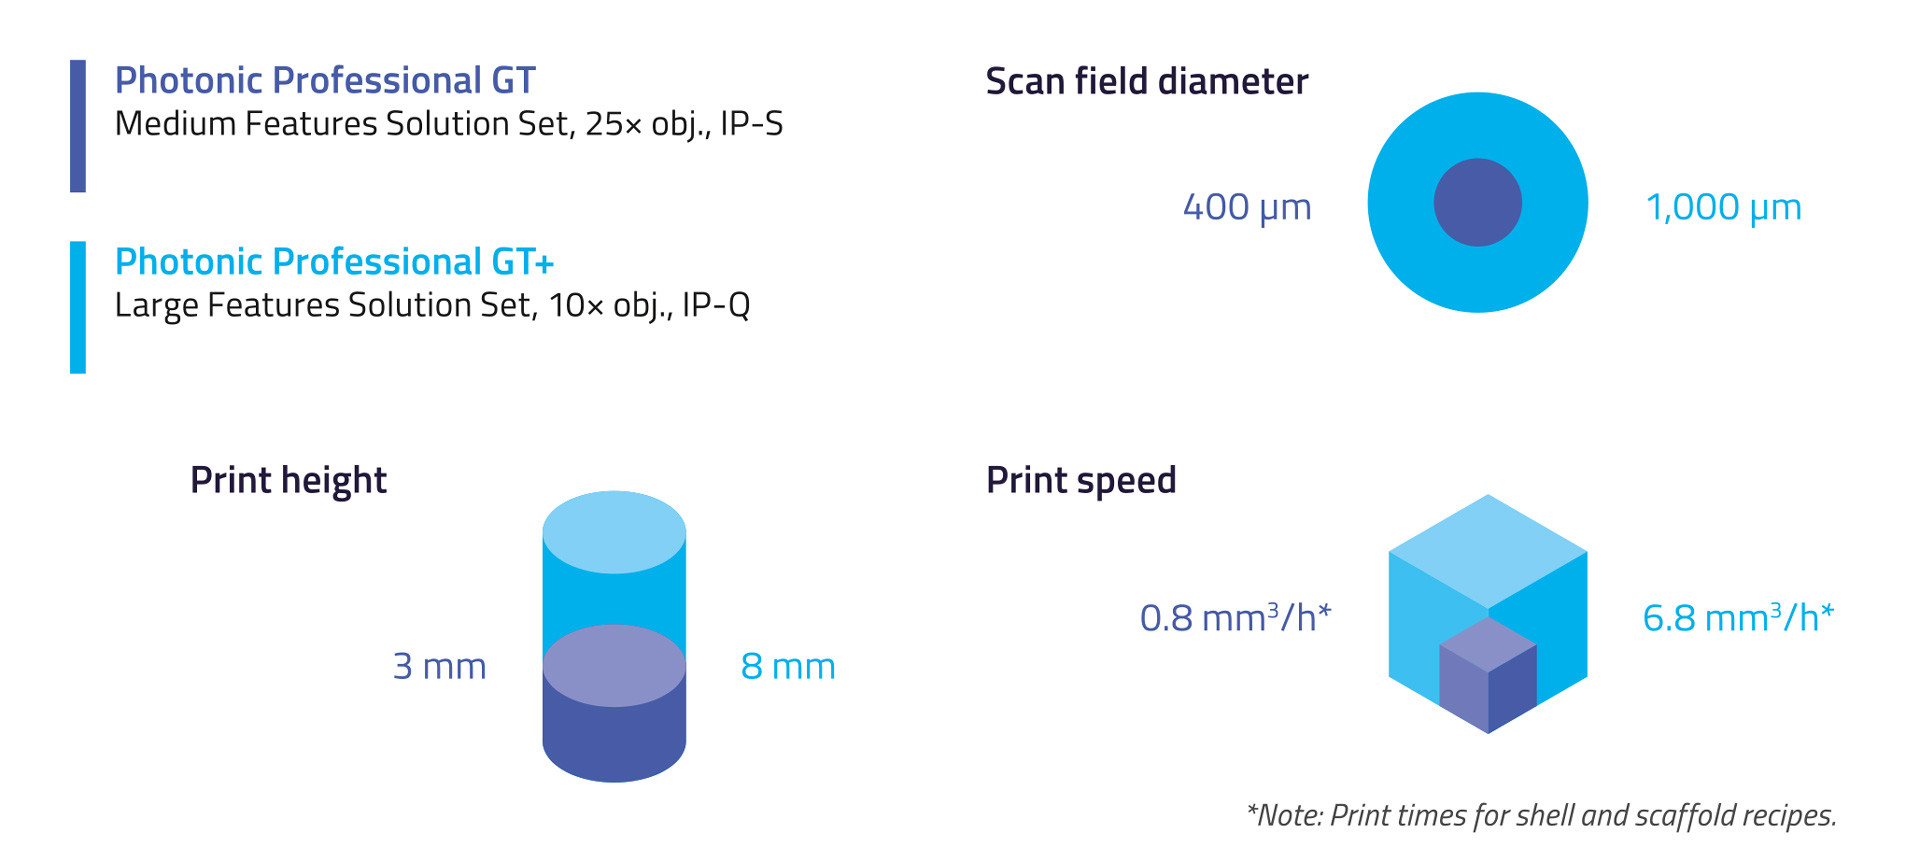 Photonic Professional GT vs Photonic Professional GT+. Scan field diameter, print height, print speed